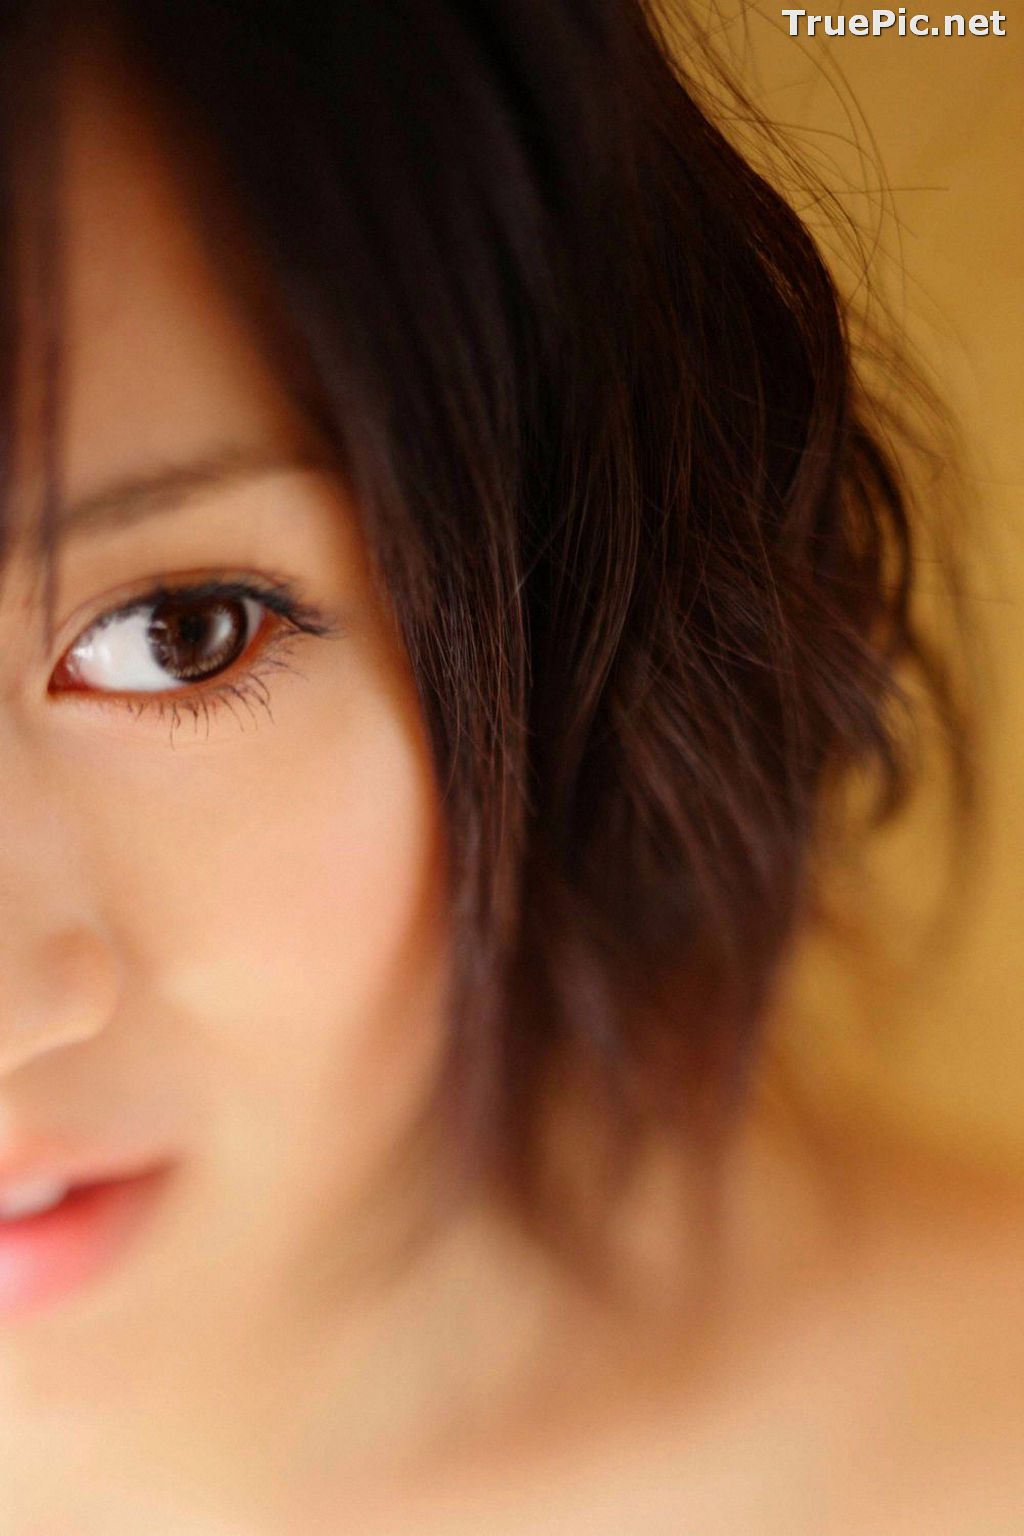 Image [YS Web] Vol.330 - Japanese Actress and Singer - Maeda Atsuko - TruePic.net - Picture-35